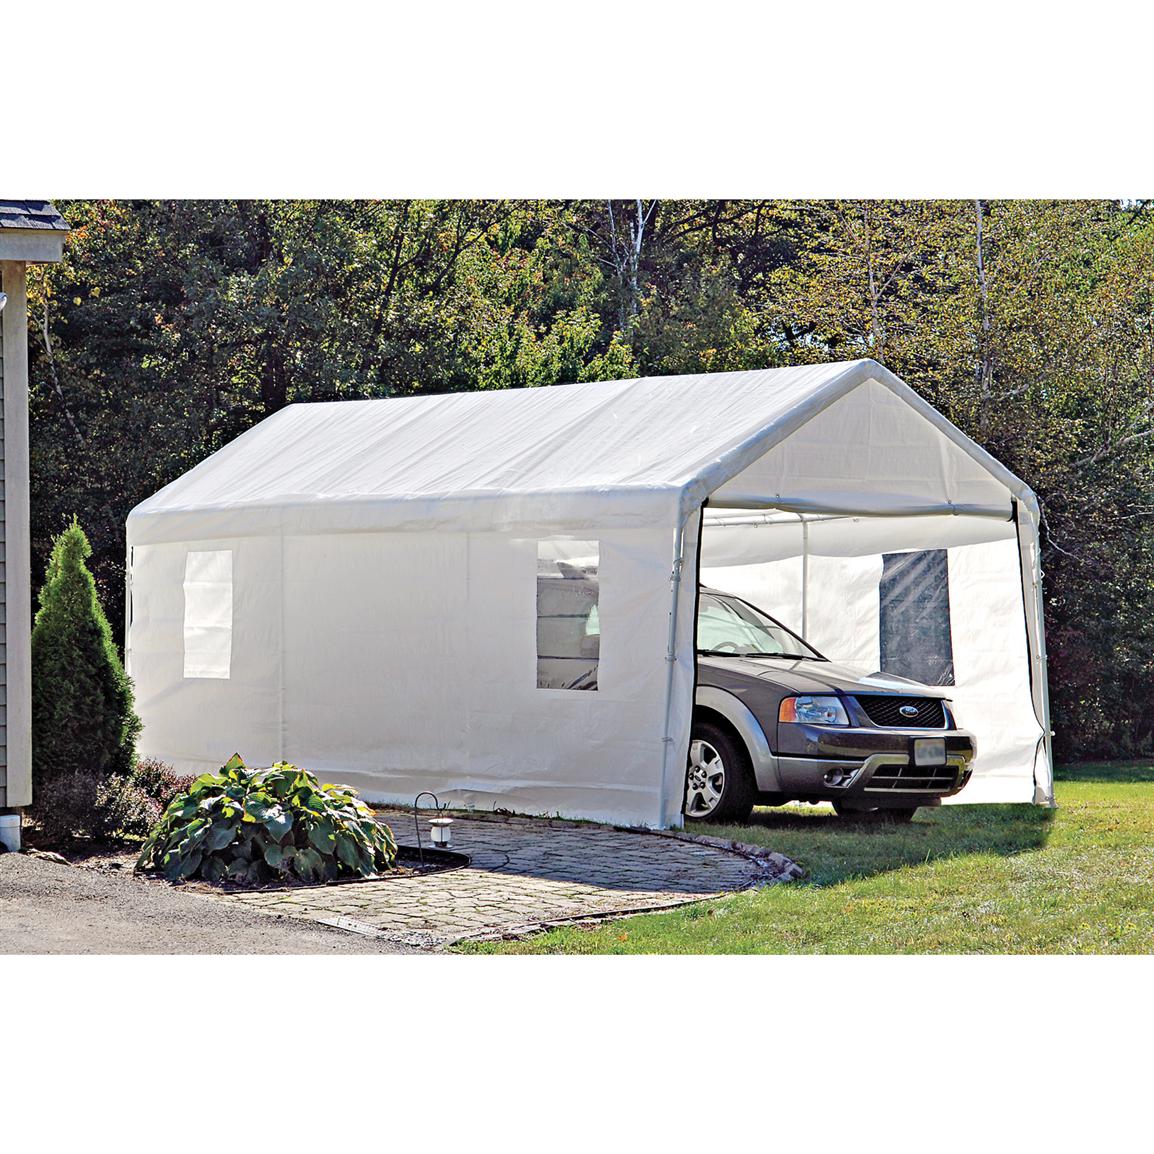 ShelterLogic Portable Garage Canopy Carport, 10' x 20' 117083, Garage